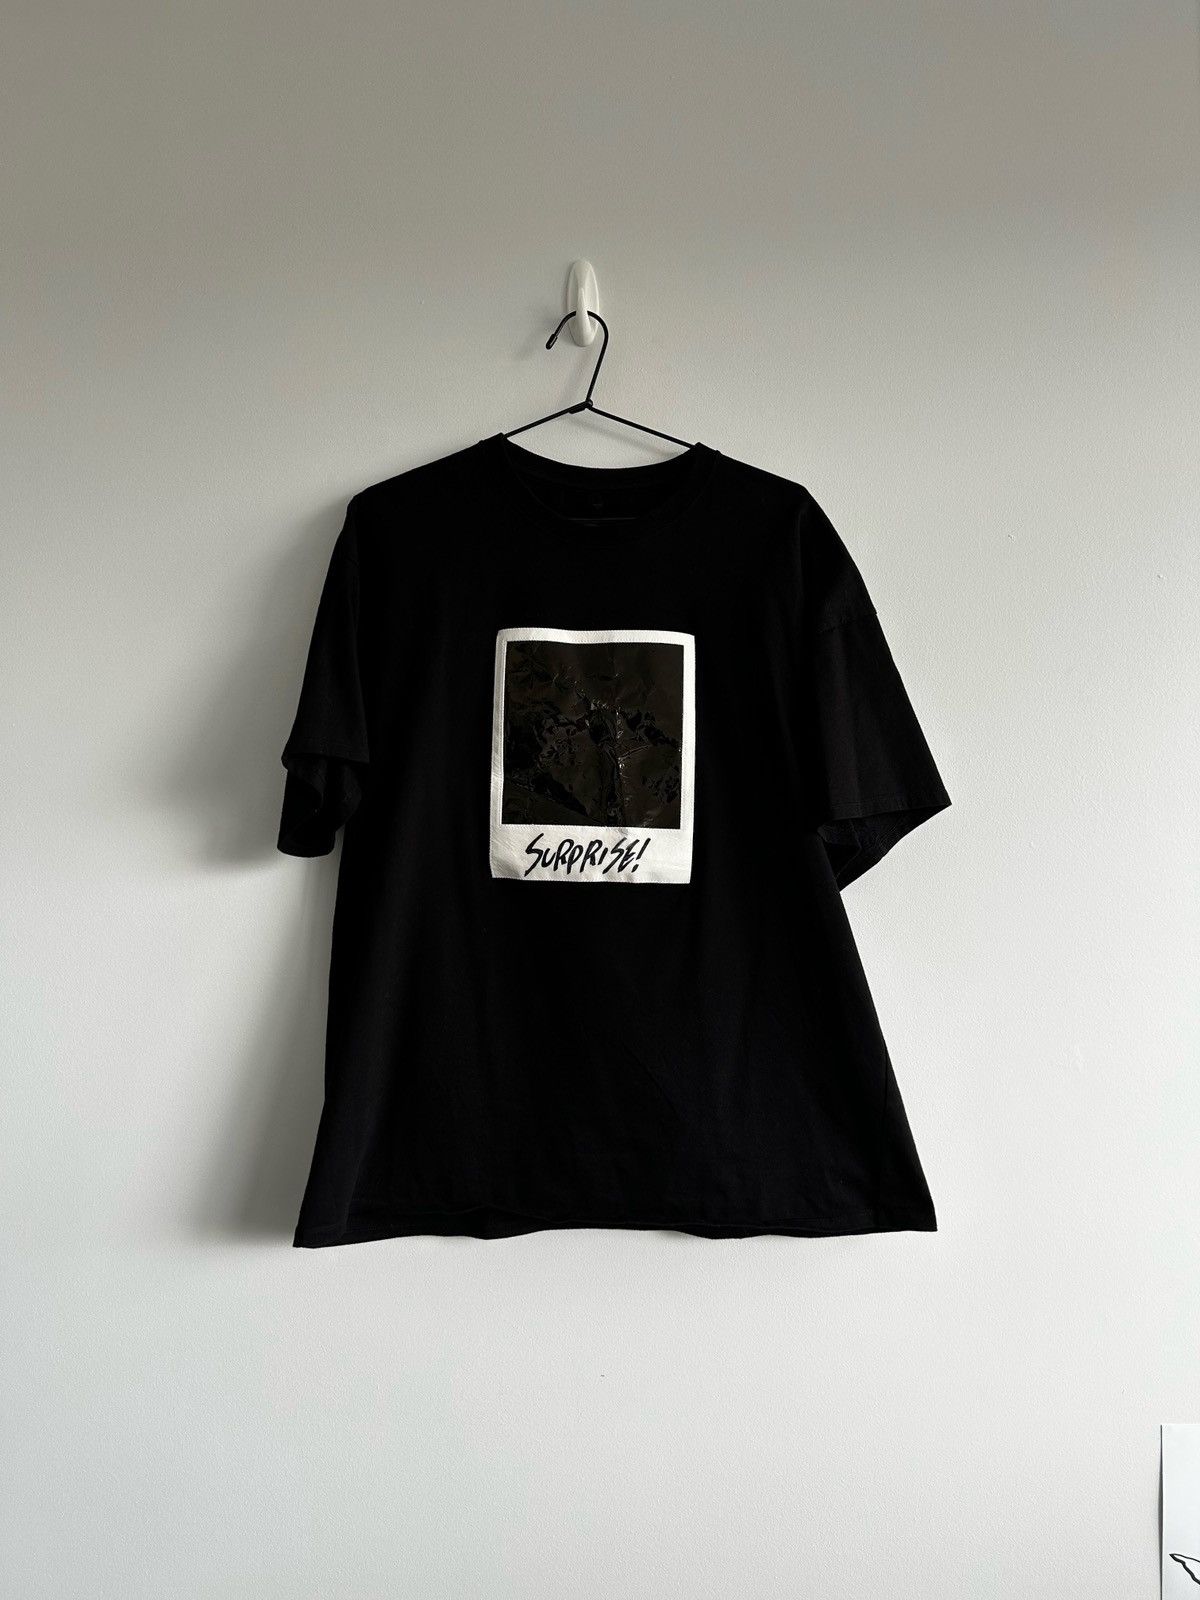 Doublet AW19 “Surprise!” Polaroid T-Shirt | Grailed